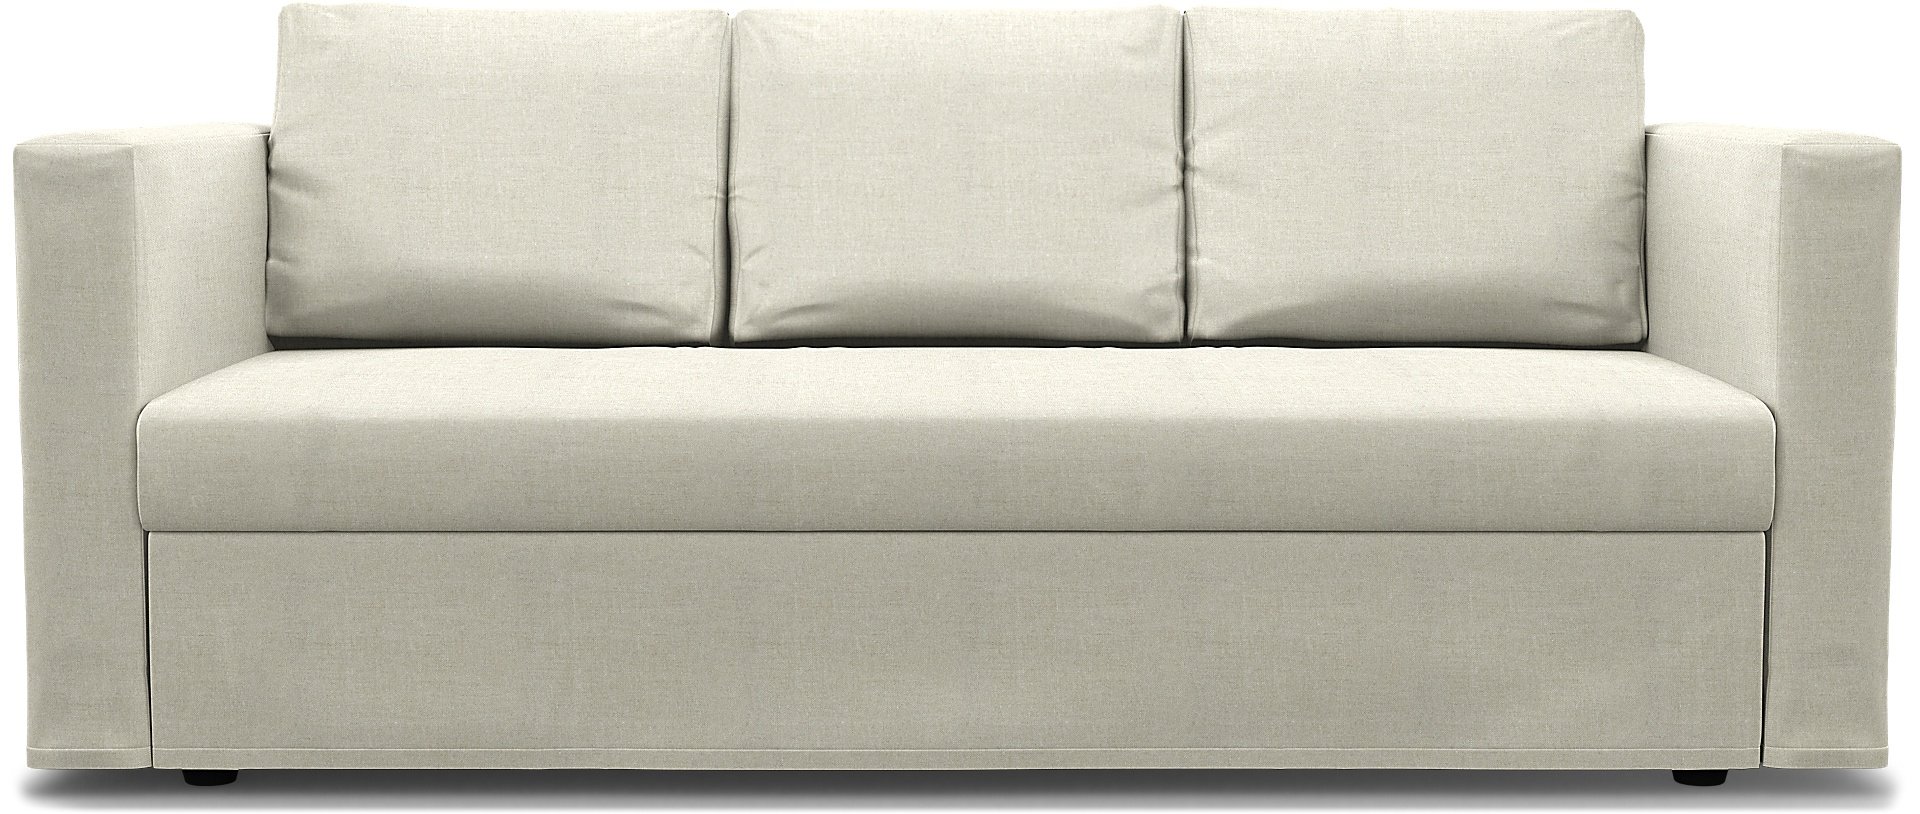 IKEA - Friheten 3 Seater Sofa Bed Cover, Natural, Linen - Bemz